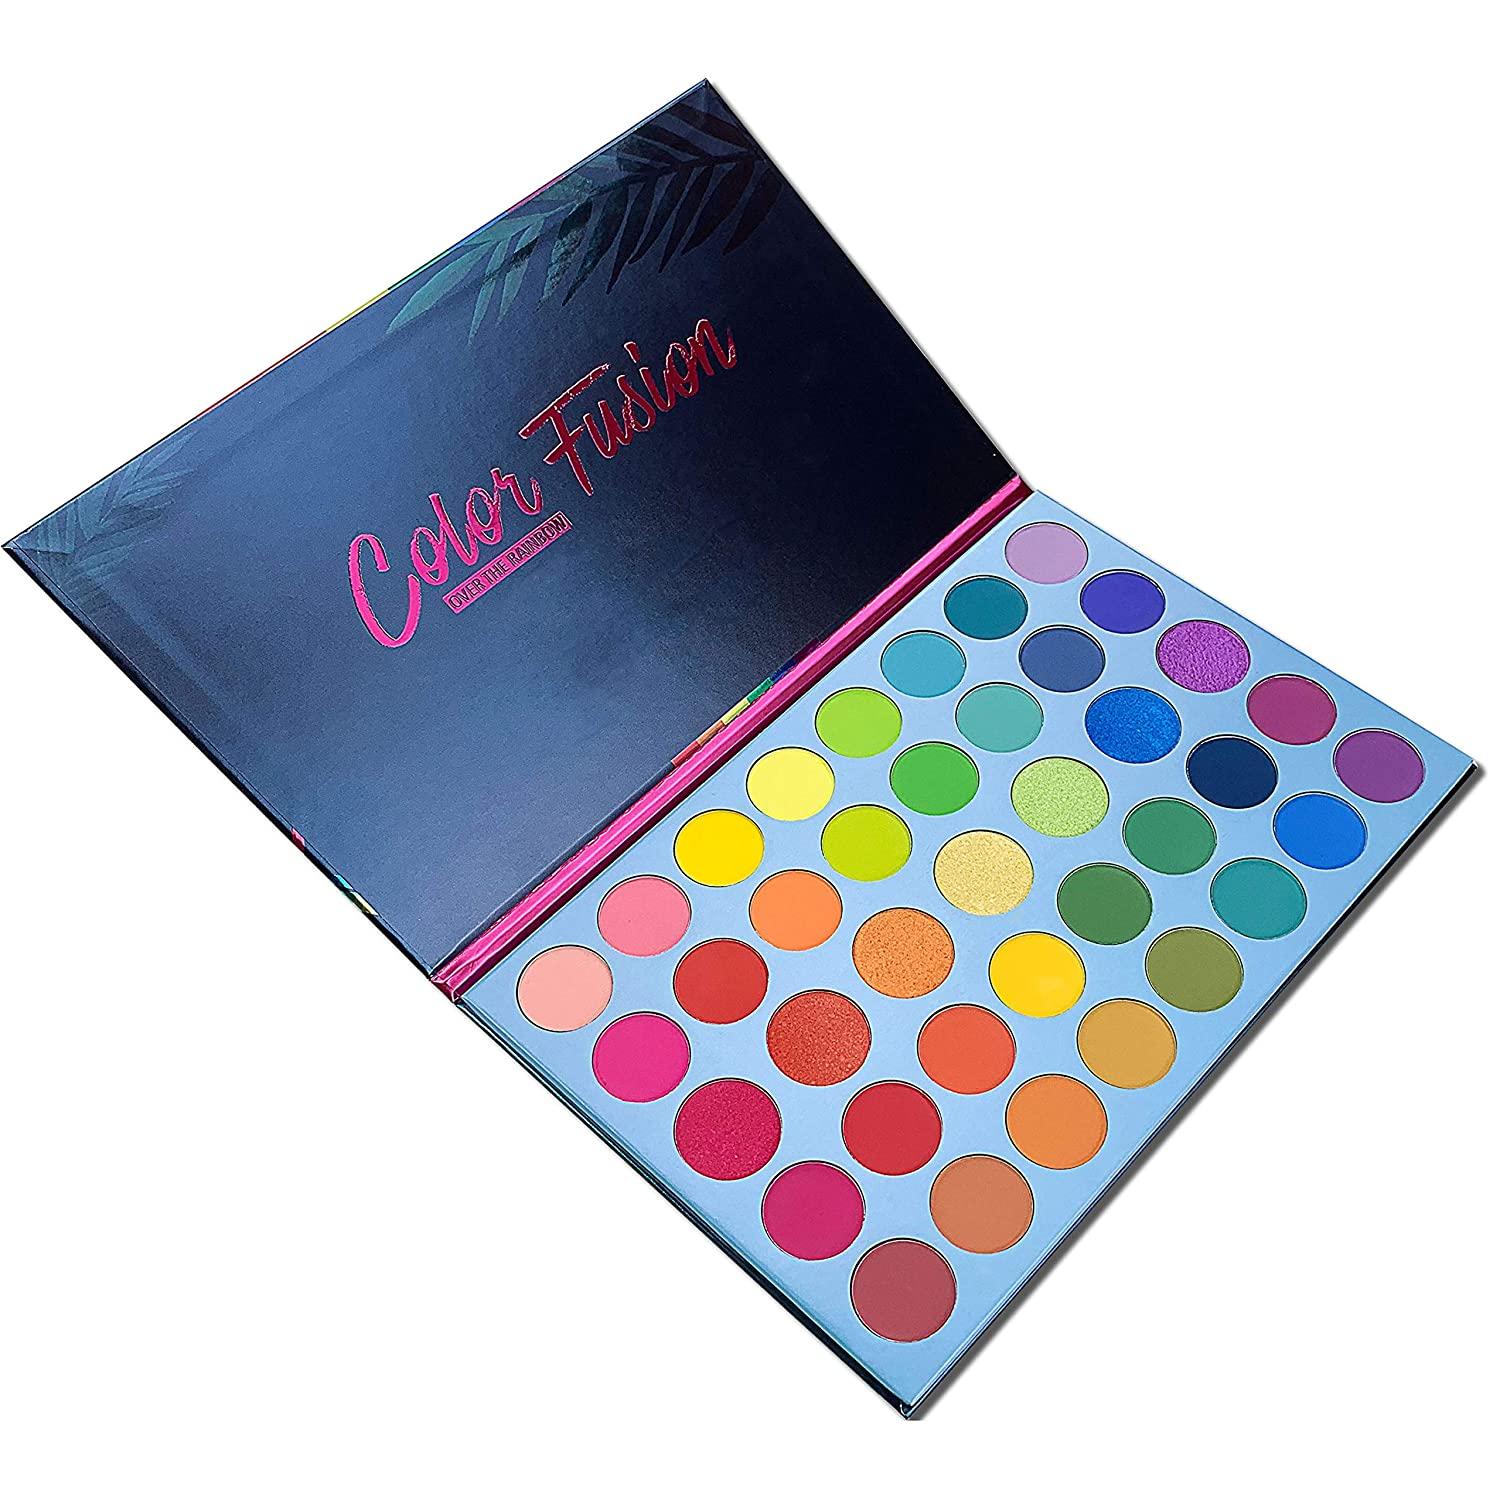 Pro Makeup Set 39 Colors Multicolor Shimmer Glitter Matte Long Lasting –